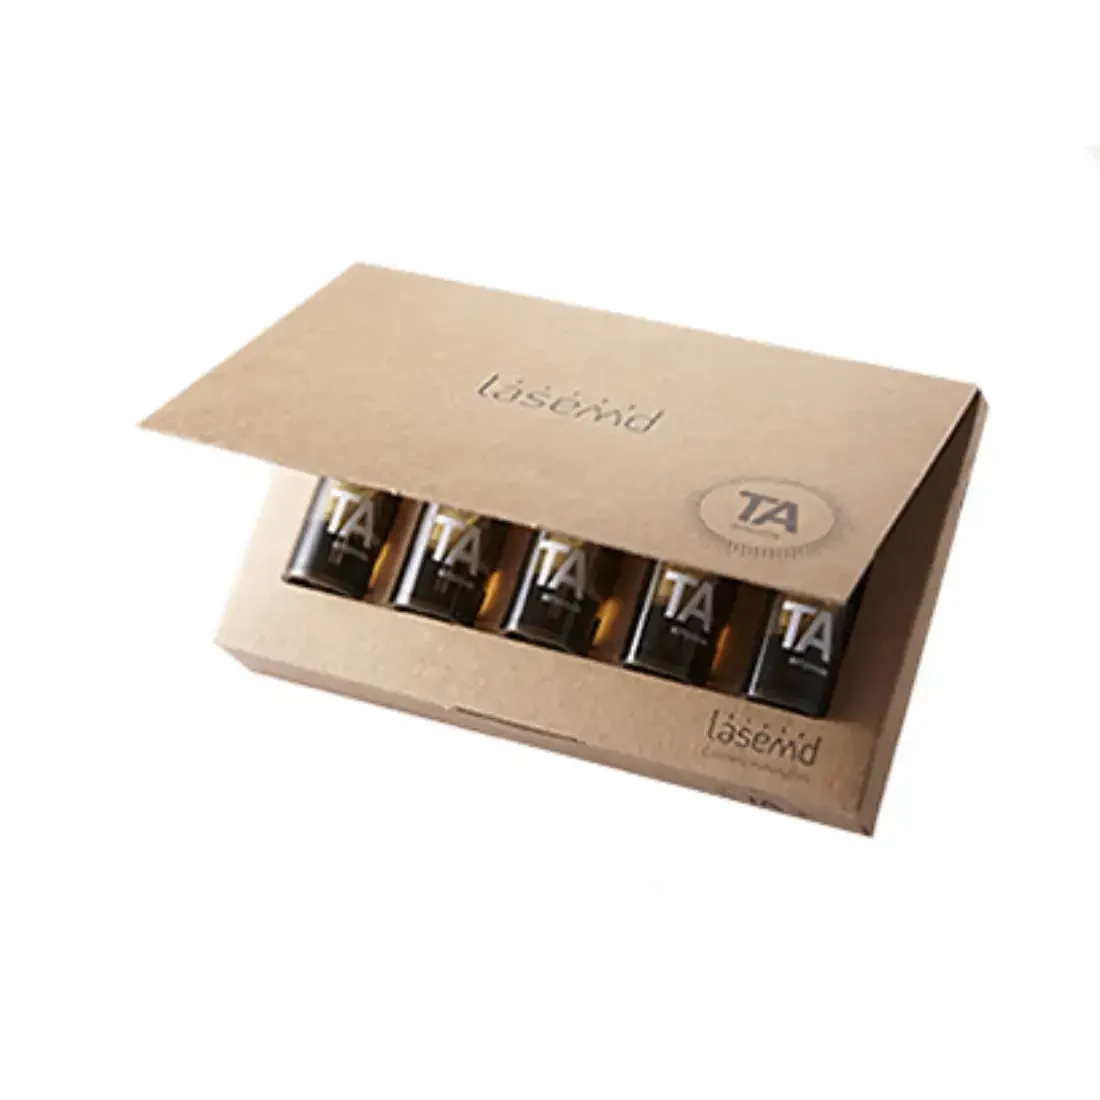 custom-design-cbd-vial-packaging-boxes